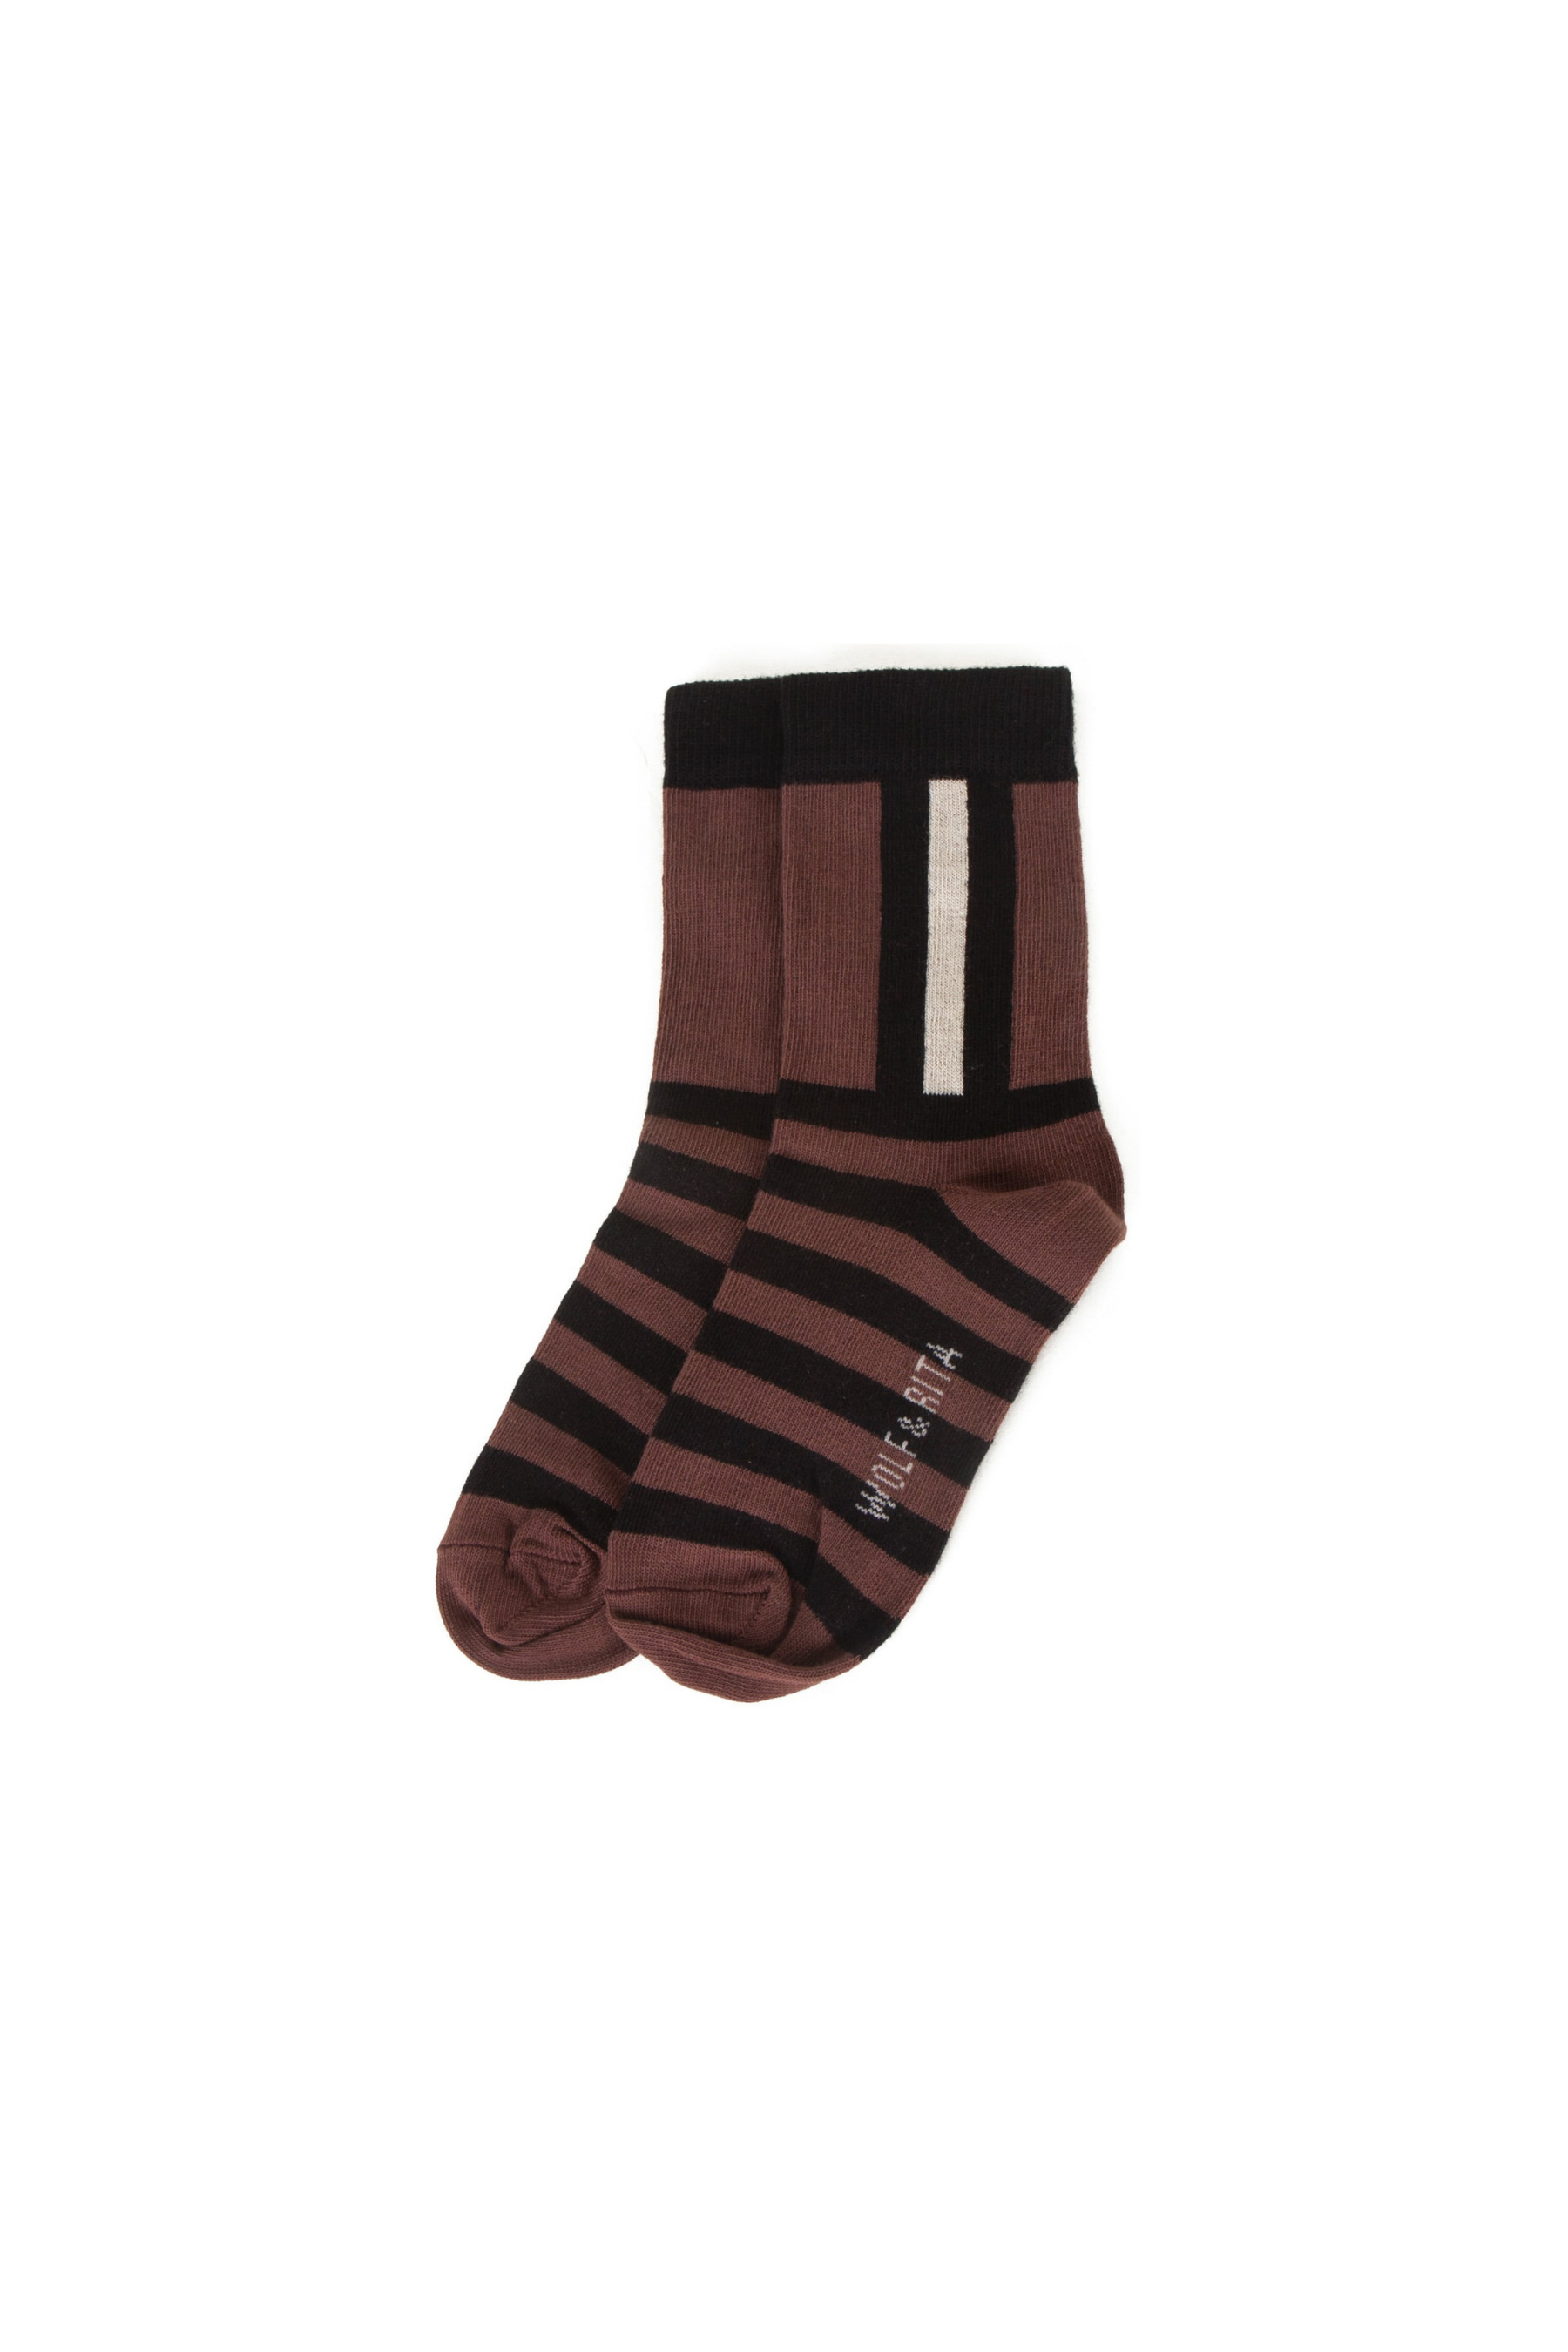 Socks Stripes Bordeaux